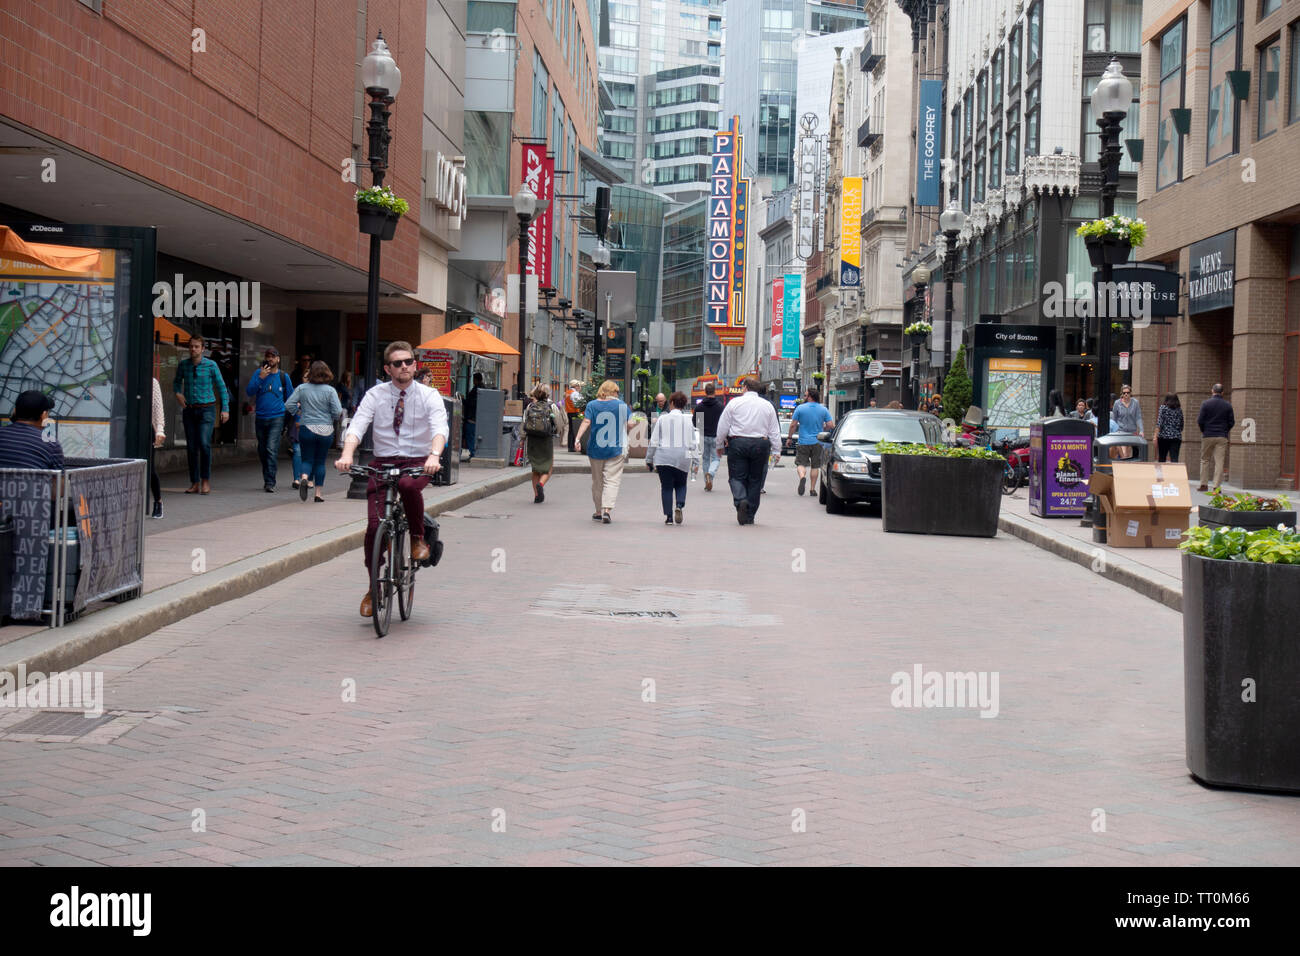 People walking and biking on Washington Street in Boston Massachusetts with neon sign for the Paramount Theater Stock Photo